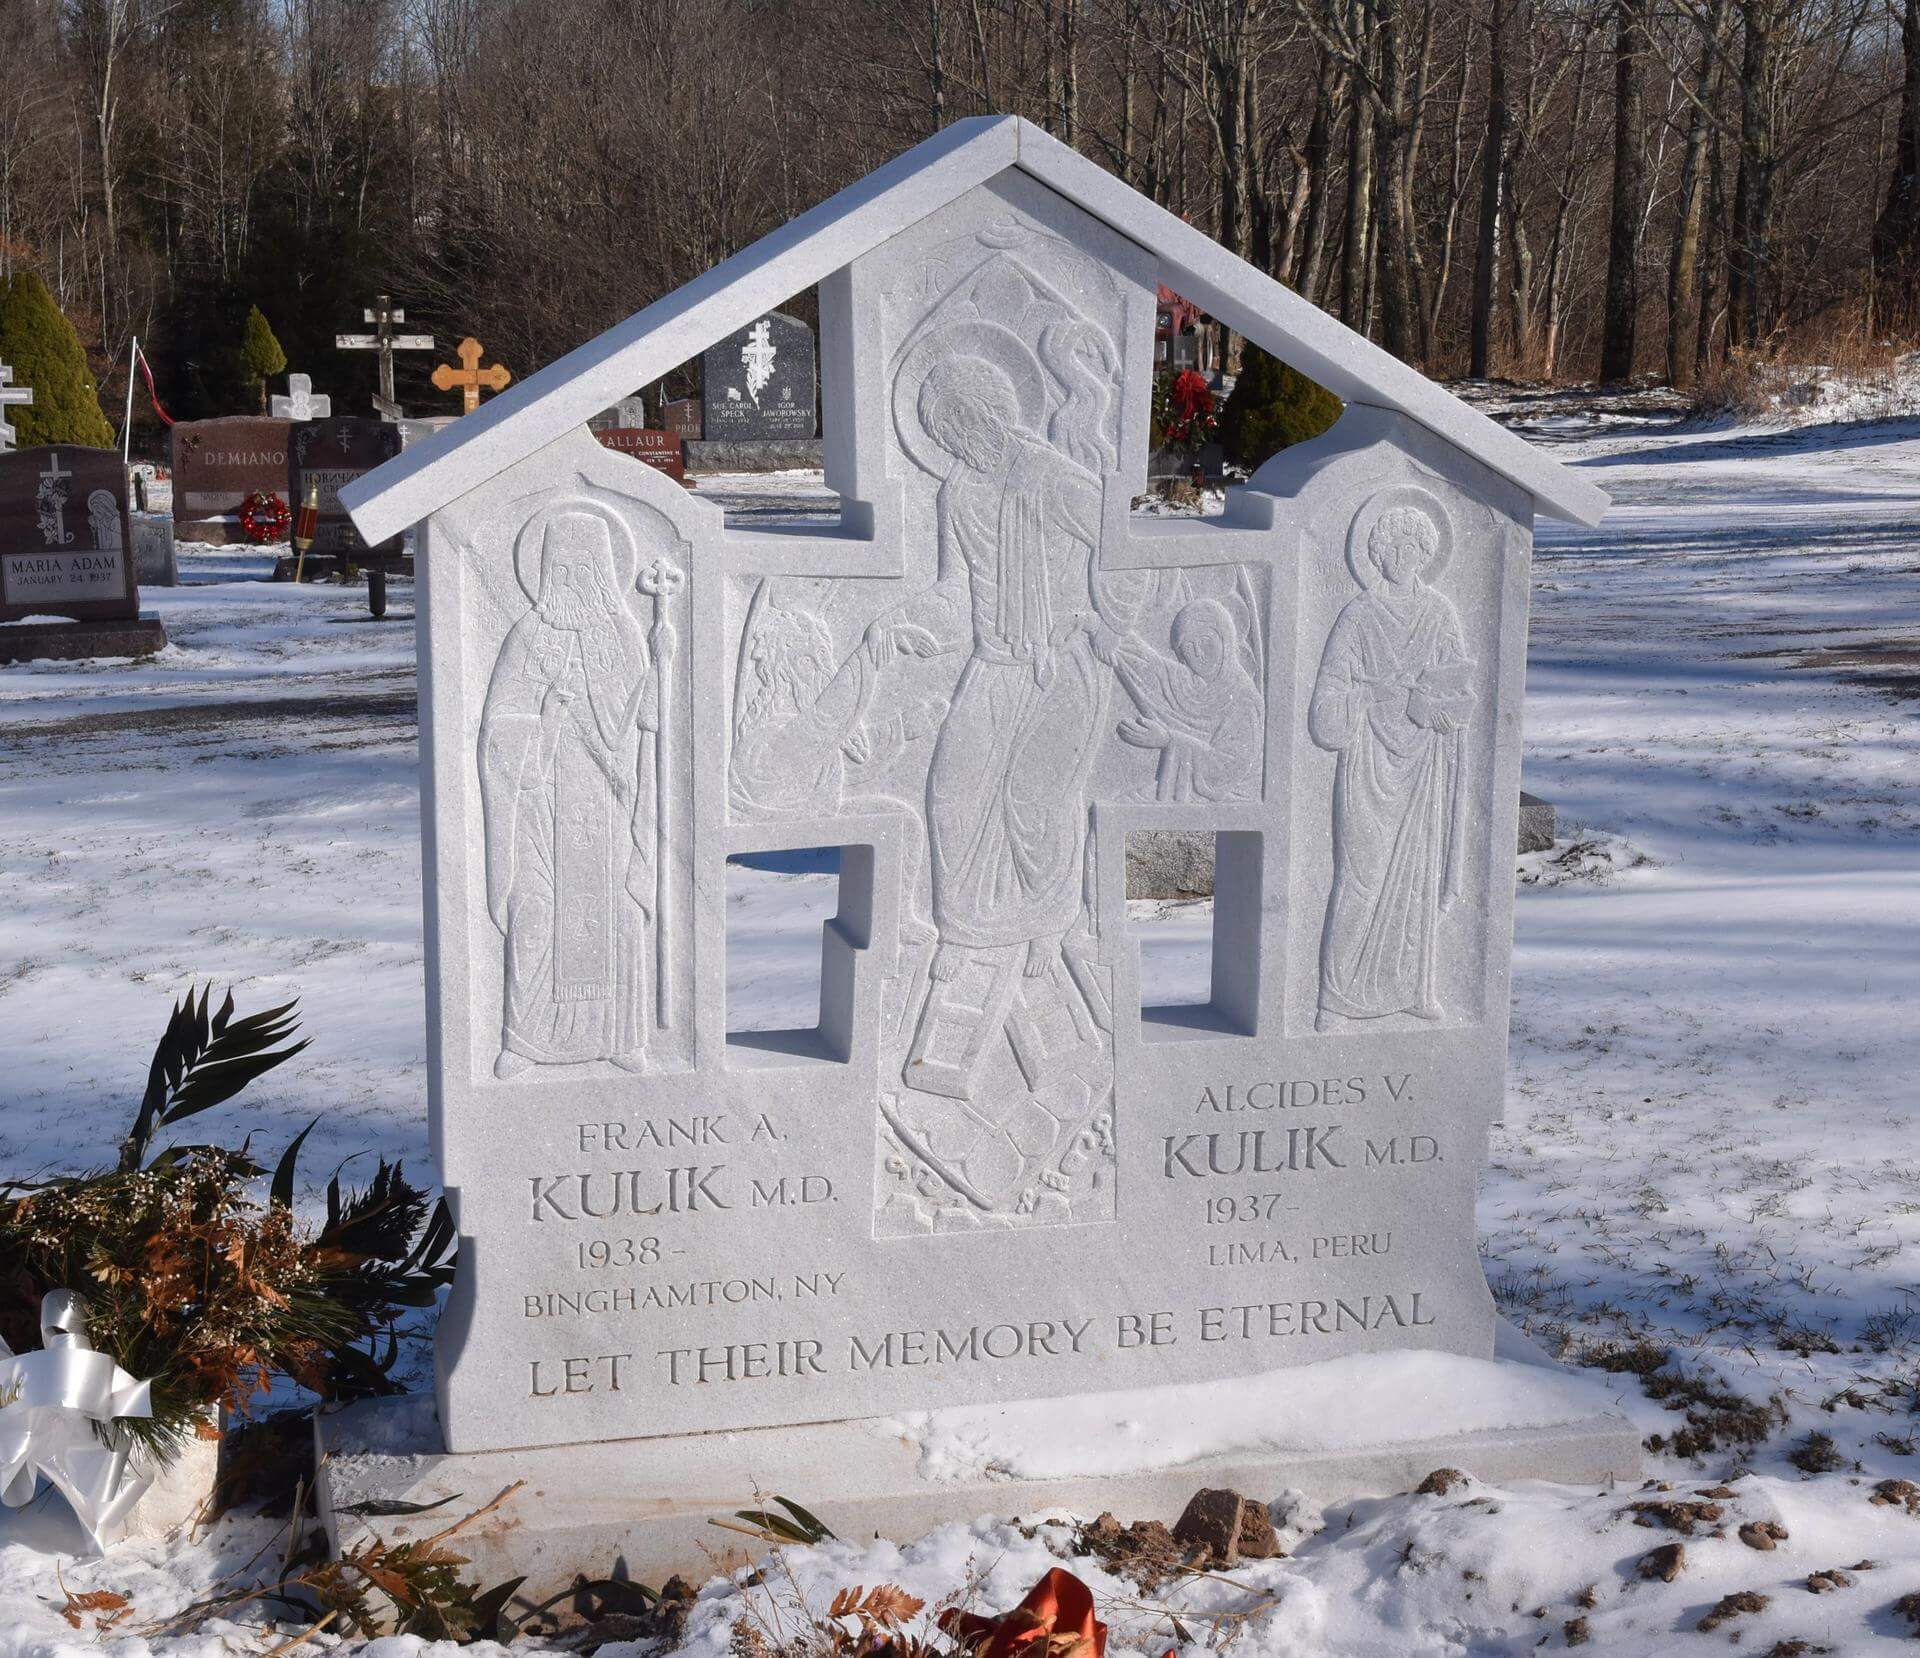 Grave Crosses and Burial Shroud